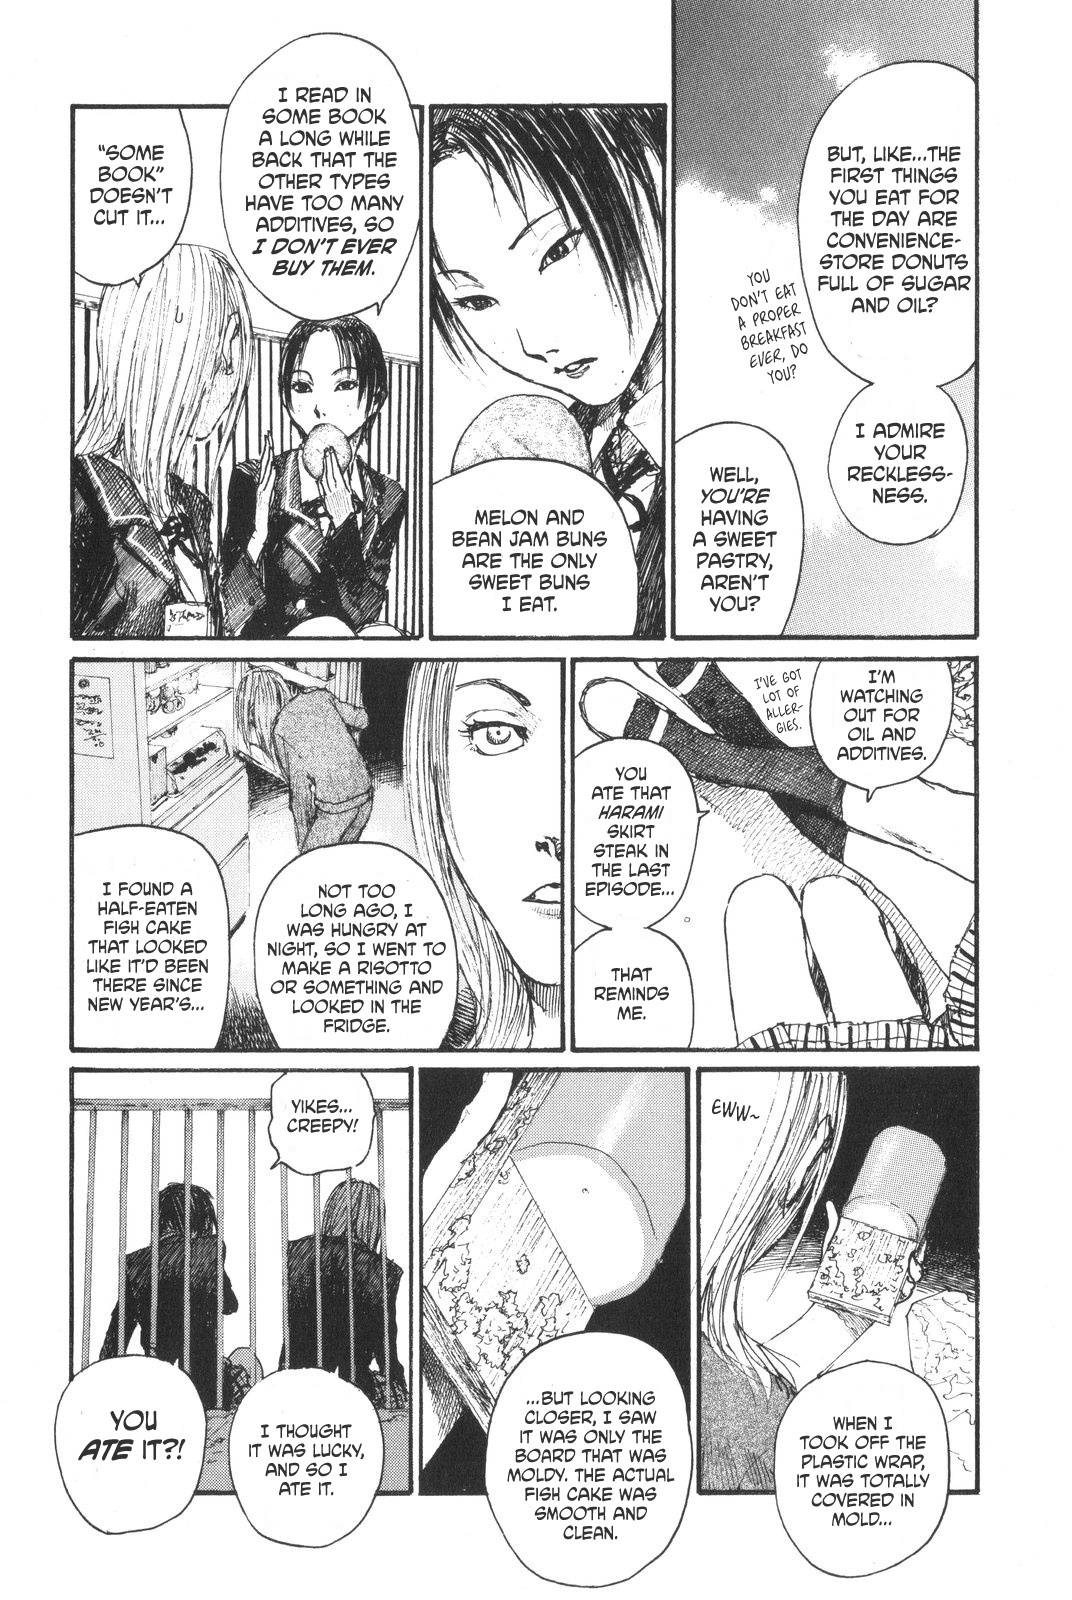 Sister Generator ~Hiroaki Samura Short Stories~ - Page 2